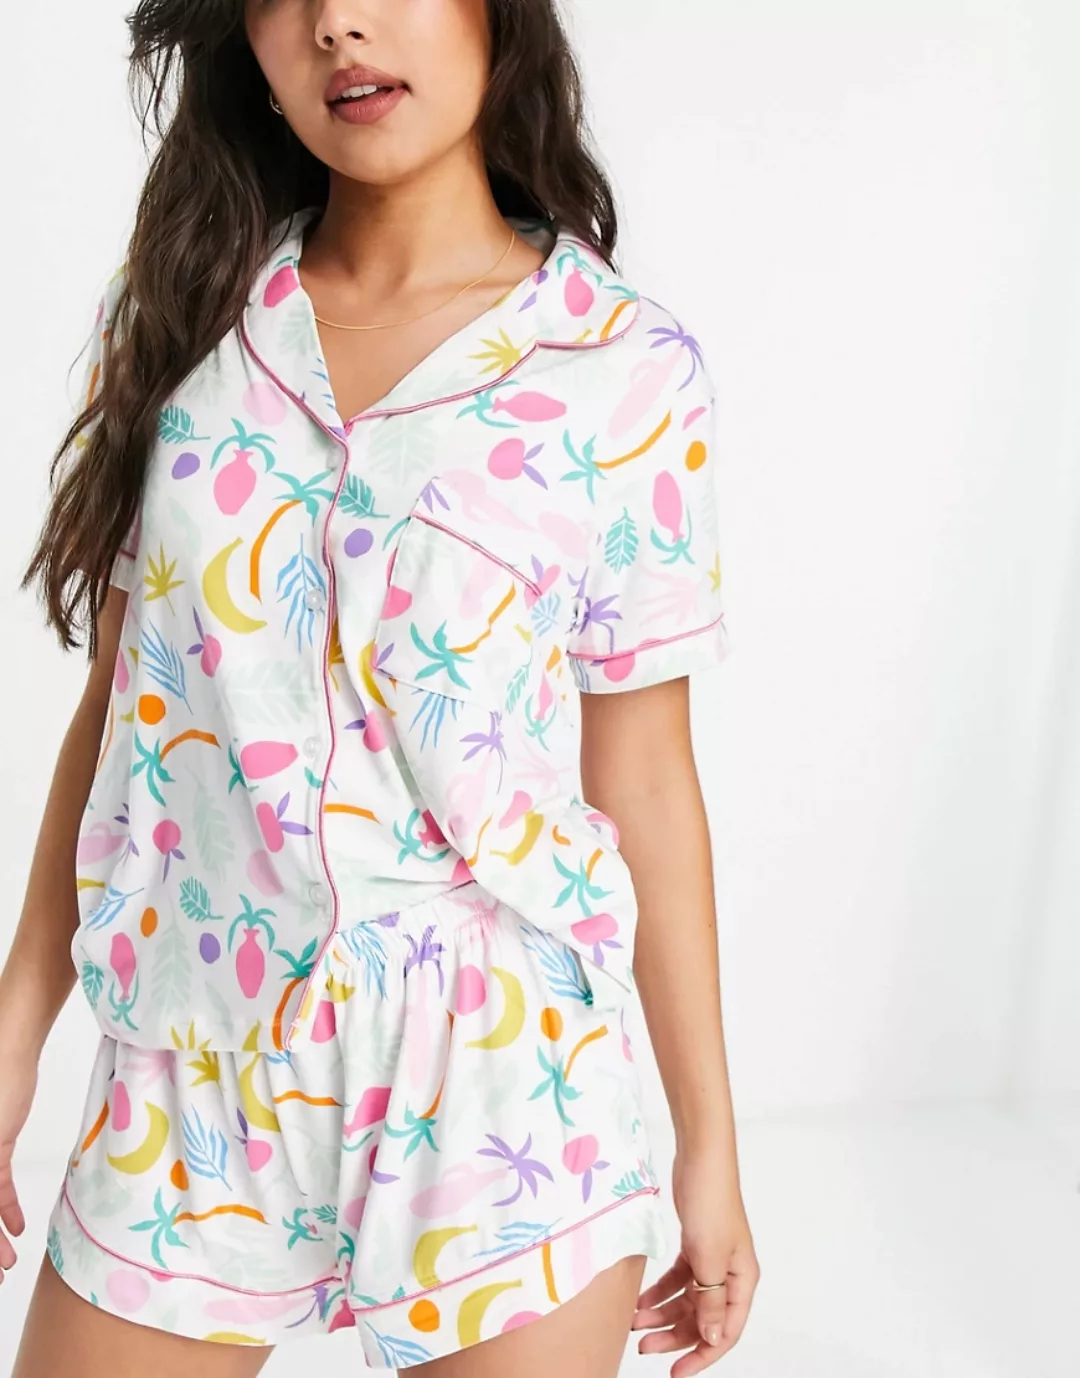 Wellness Project x Chelsea Peers – Kurzes Pyjama-Set aus recyceltem Polyest günstig online kaufen